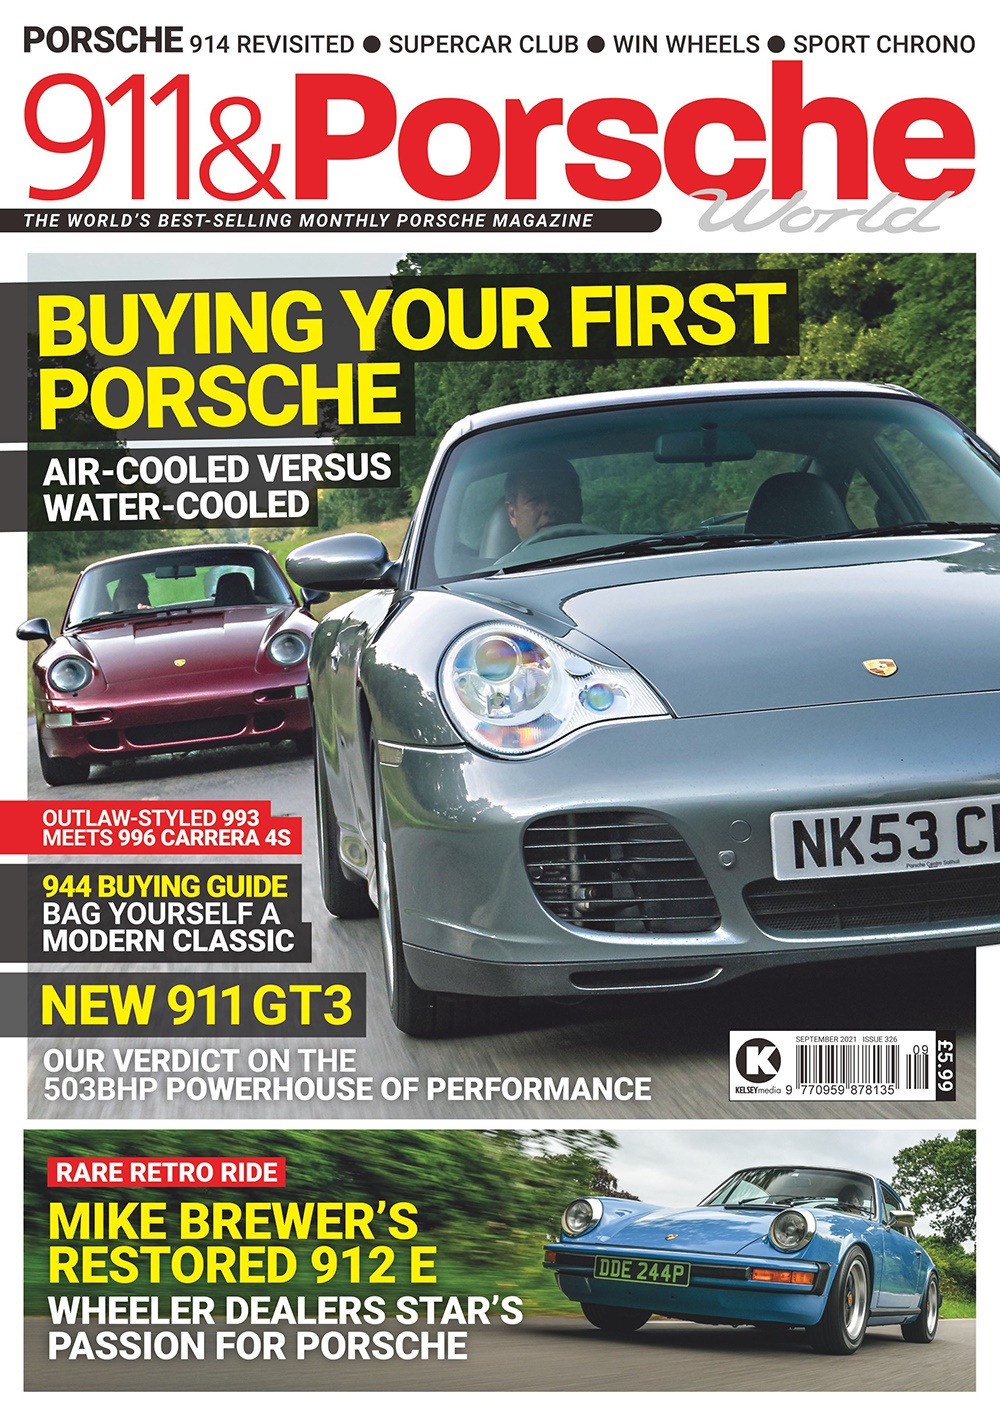 911 & Porsche World Issue 326 - September 2021